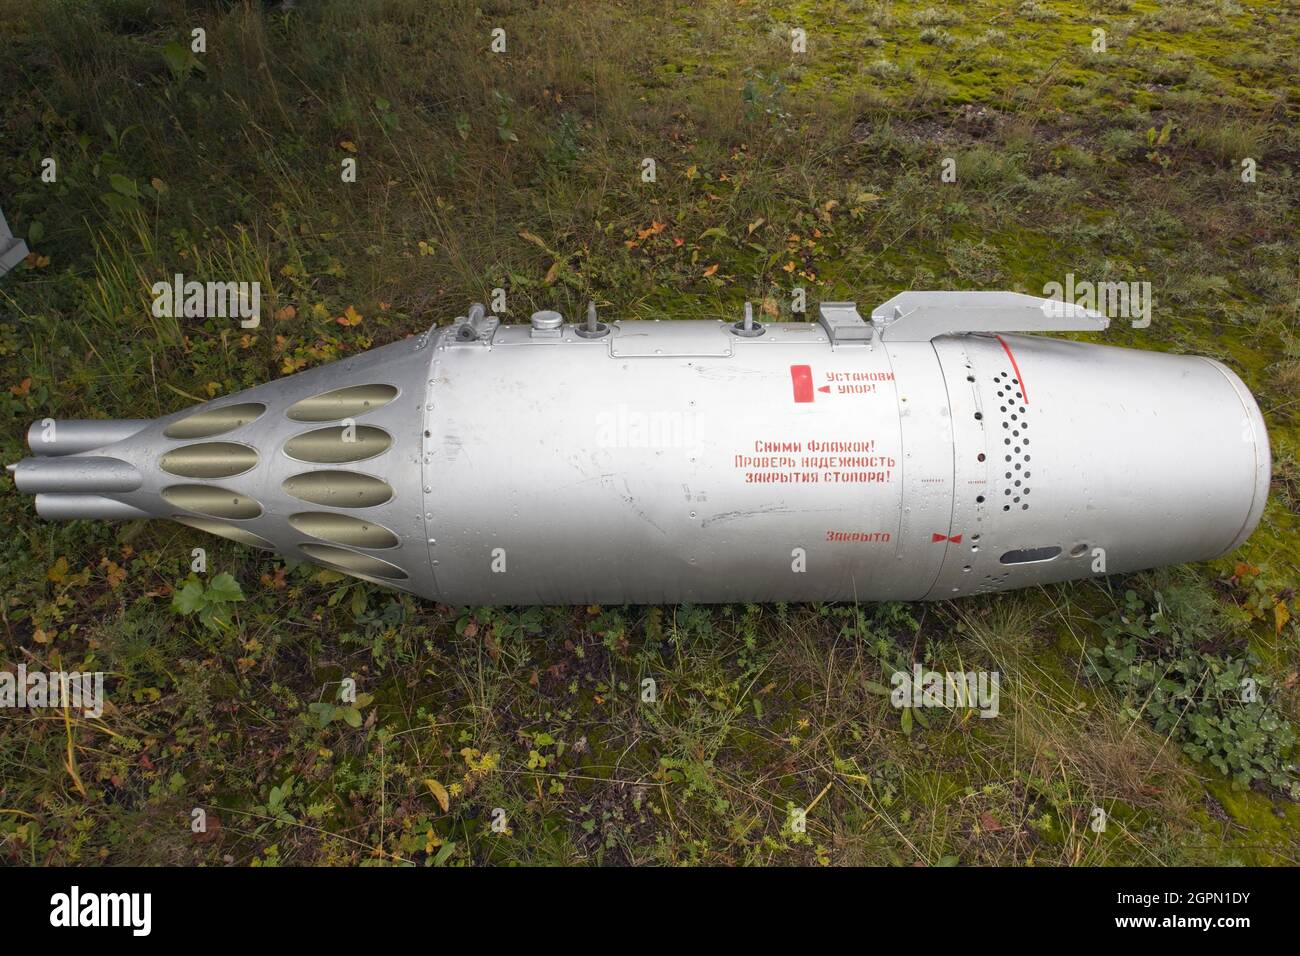 UB-32A-73 57 mm rocket launcher Stock Photo